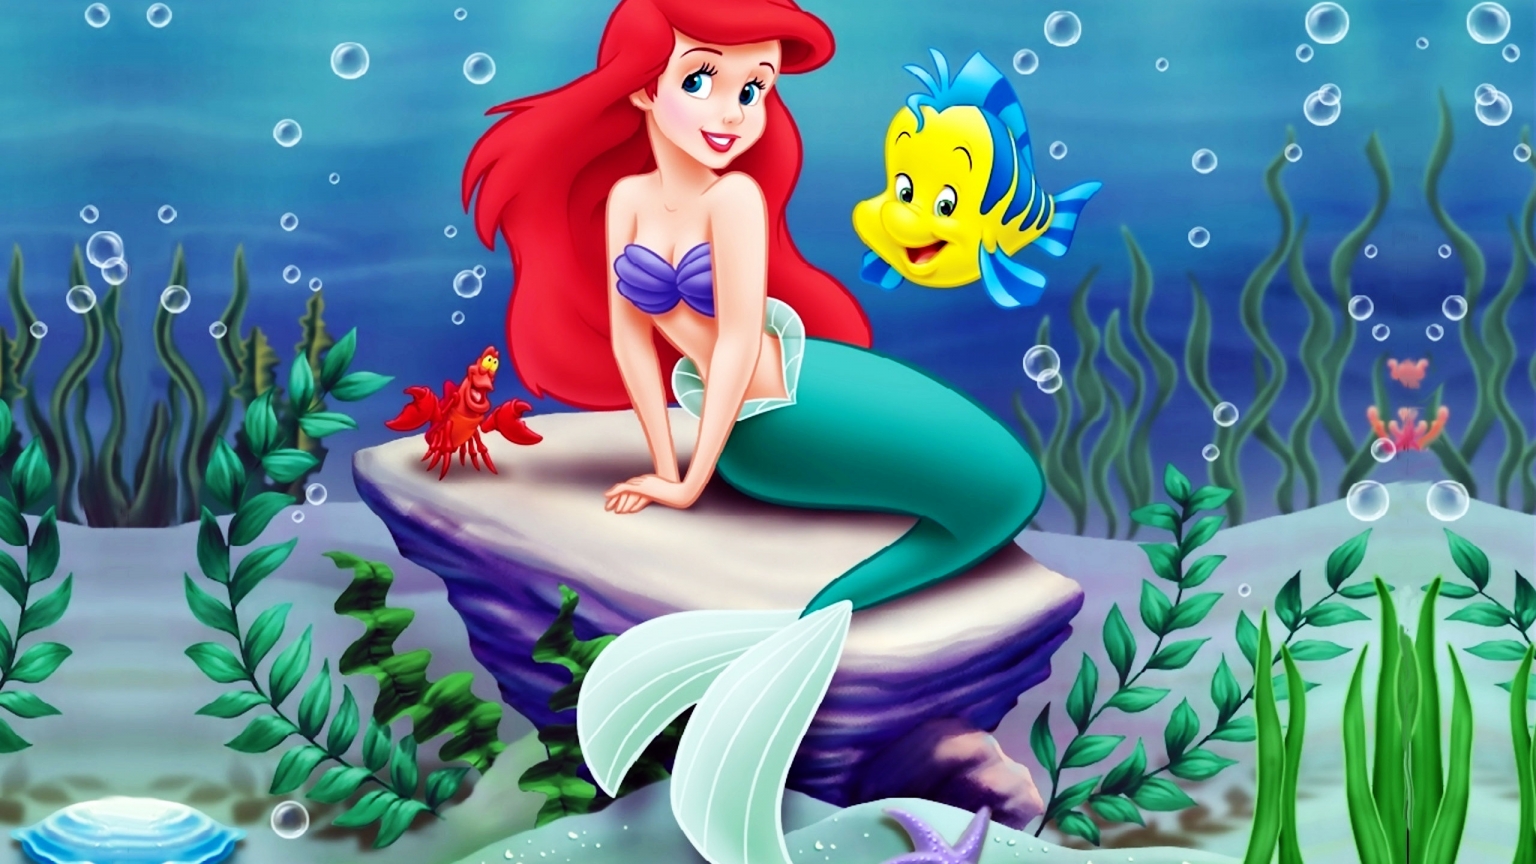 Little Mermaid Ariel for 1536 x 864 HDTV resolution